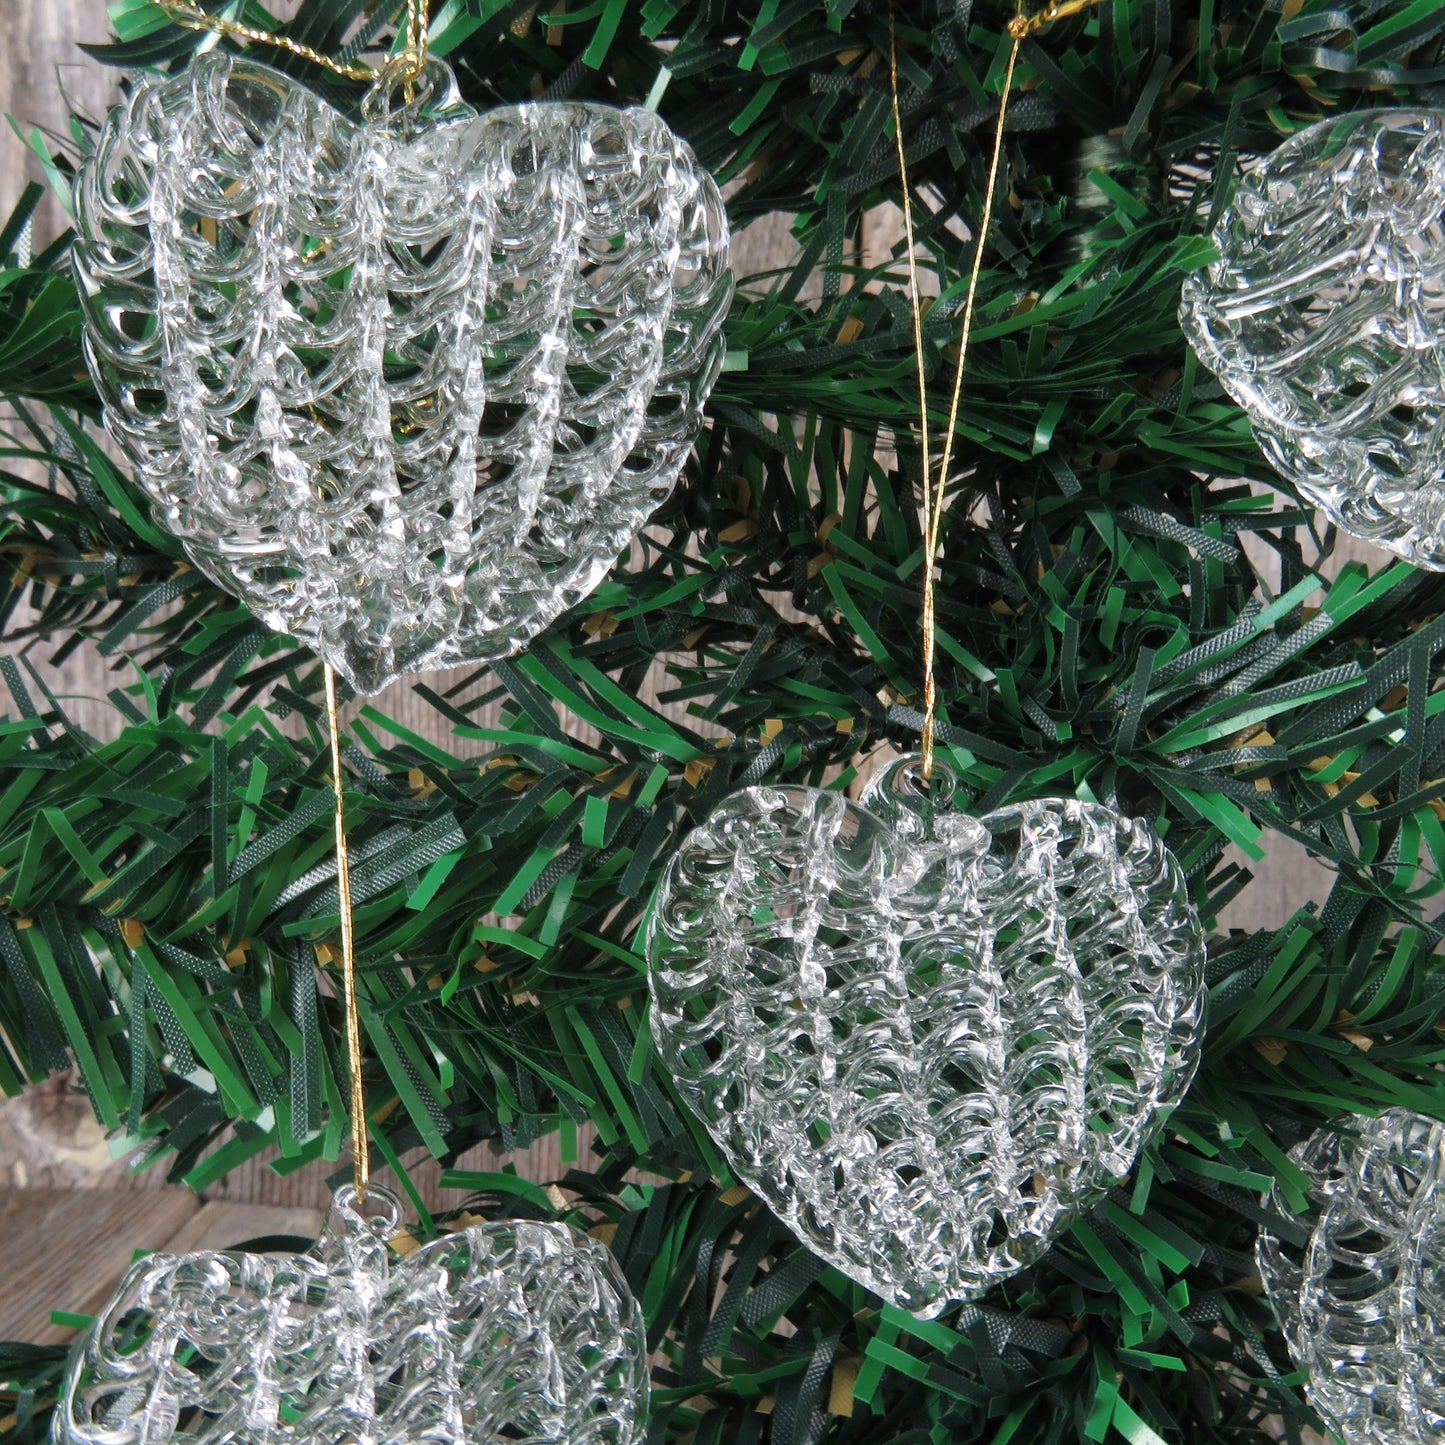 Vintage Heart Spun Glass Ornaments Clear Crystal Christmas Tree Ball Set Lot Vintage Christmas Decoration